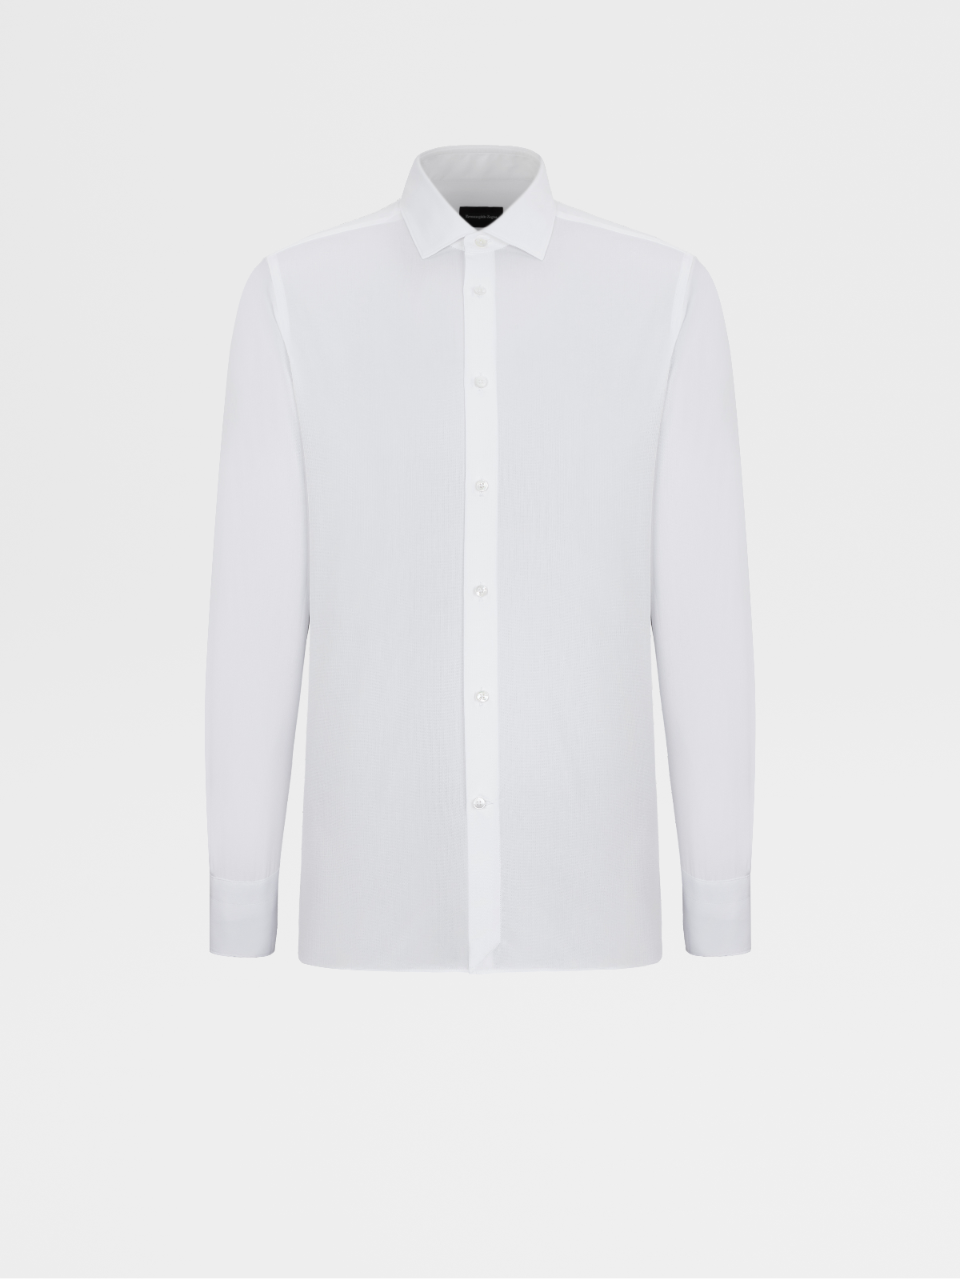 White Trecapi Cotton Tailoring Shirt, Milano Regular Fit